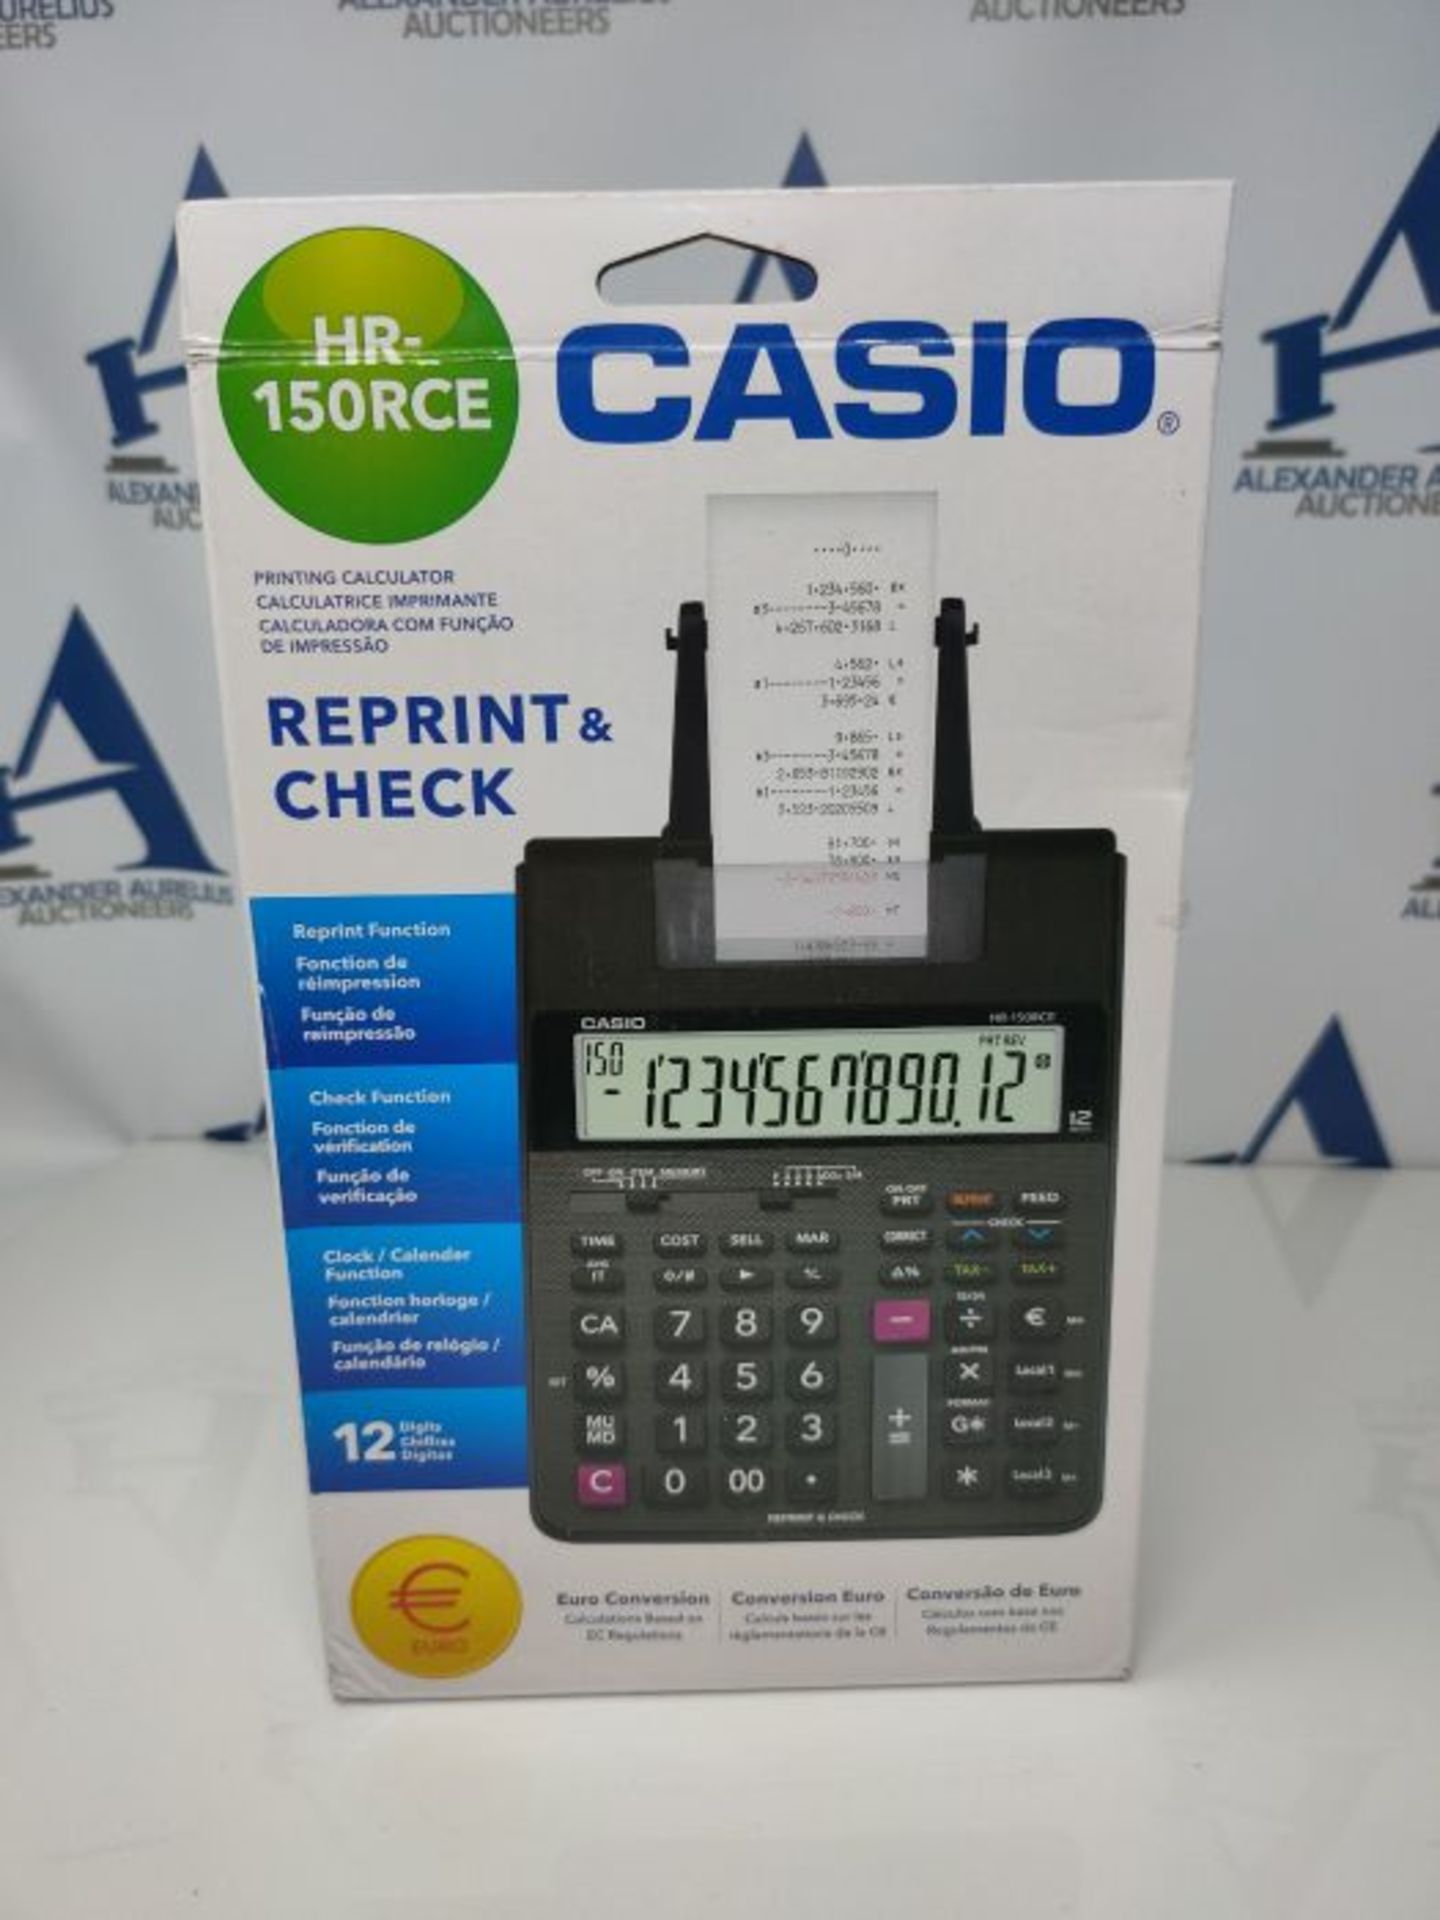 Casio HR-150RCE-WA-EC Printing Desktop Calculator, Black - Image 2 of 3